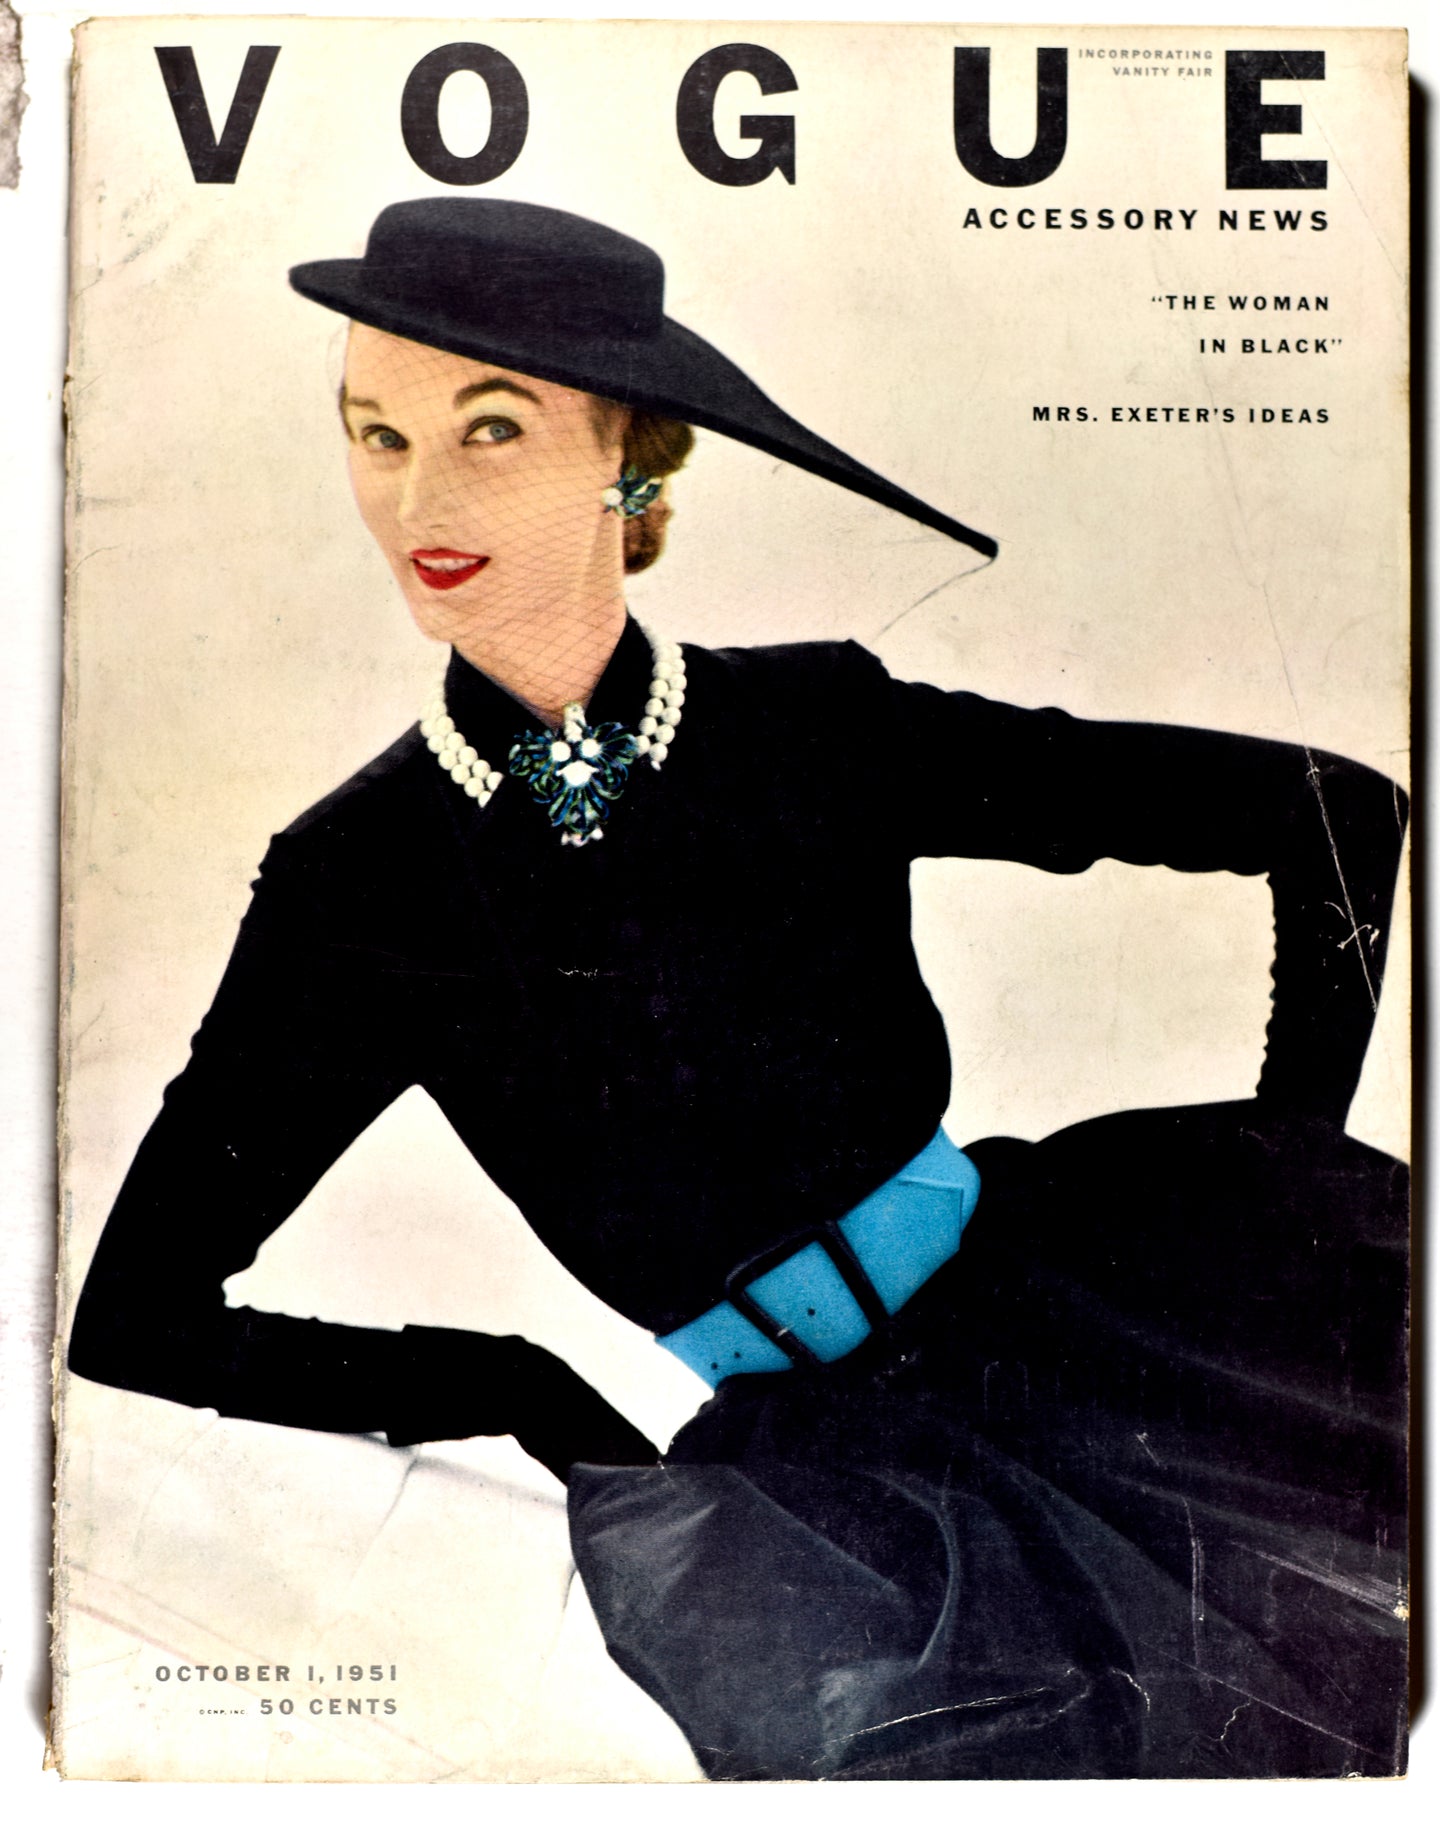 Vogue [1951/10/01]